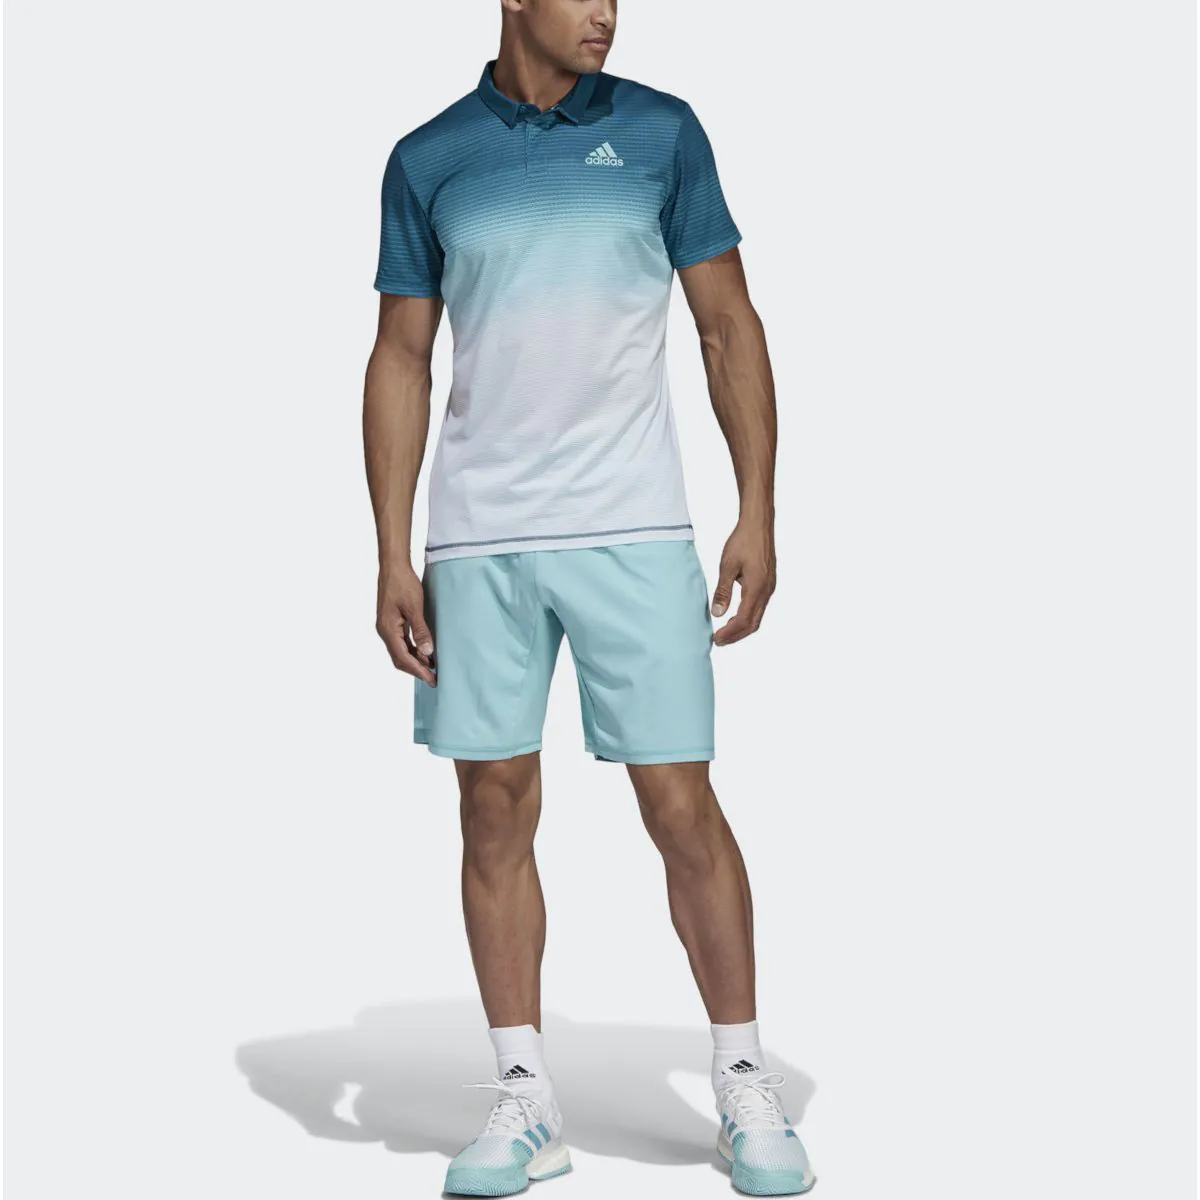 adidas Parley Men's Tennis Shorts DT4197